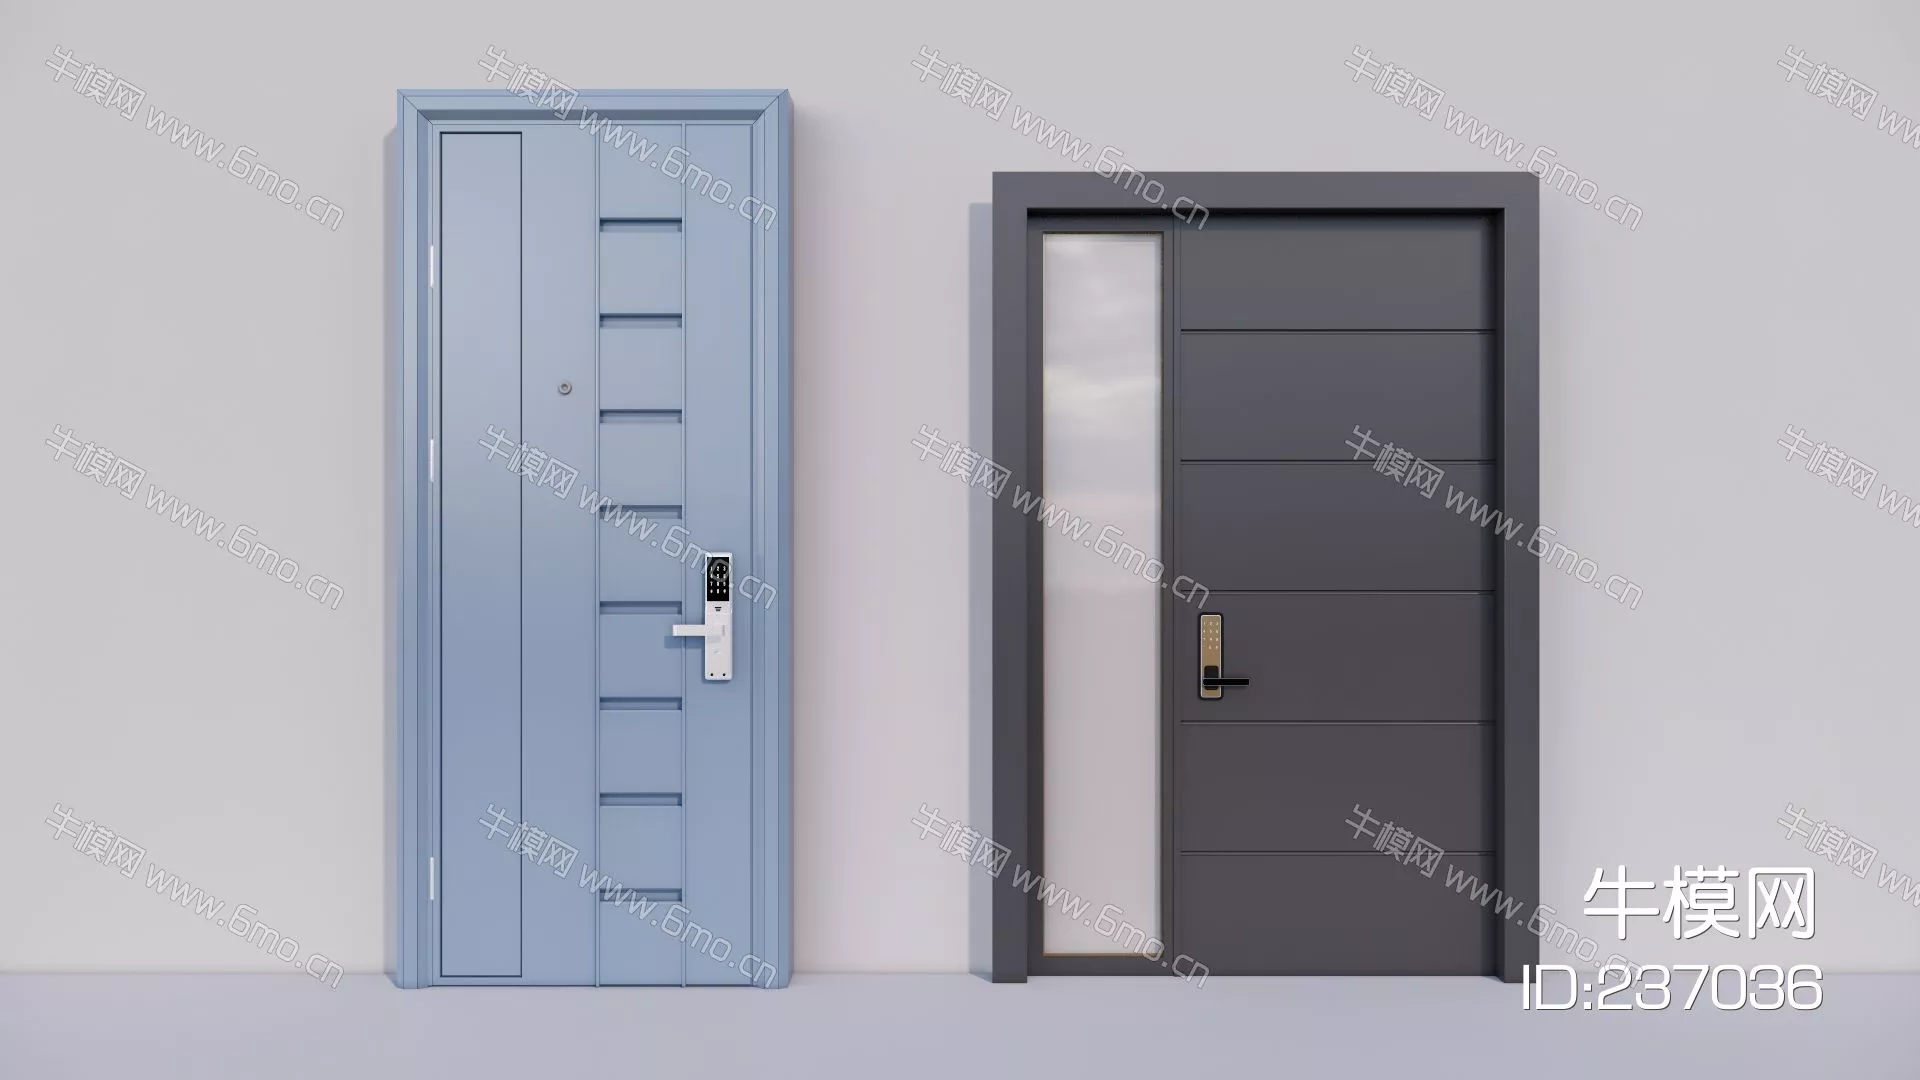 MODERN DOOR AND WINDOWS - SKETCHUP 3D MODEL - ENSCAPE - 237036